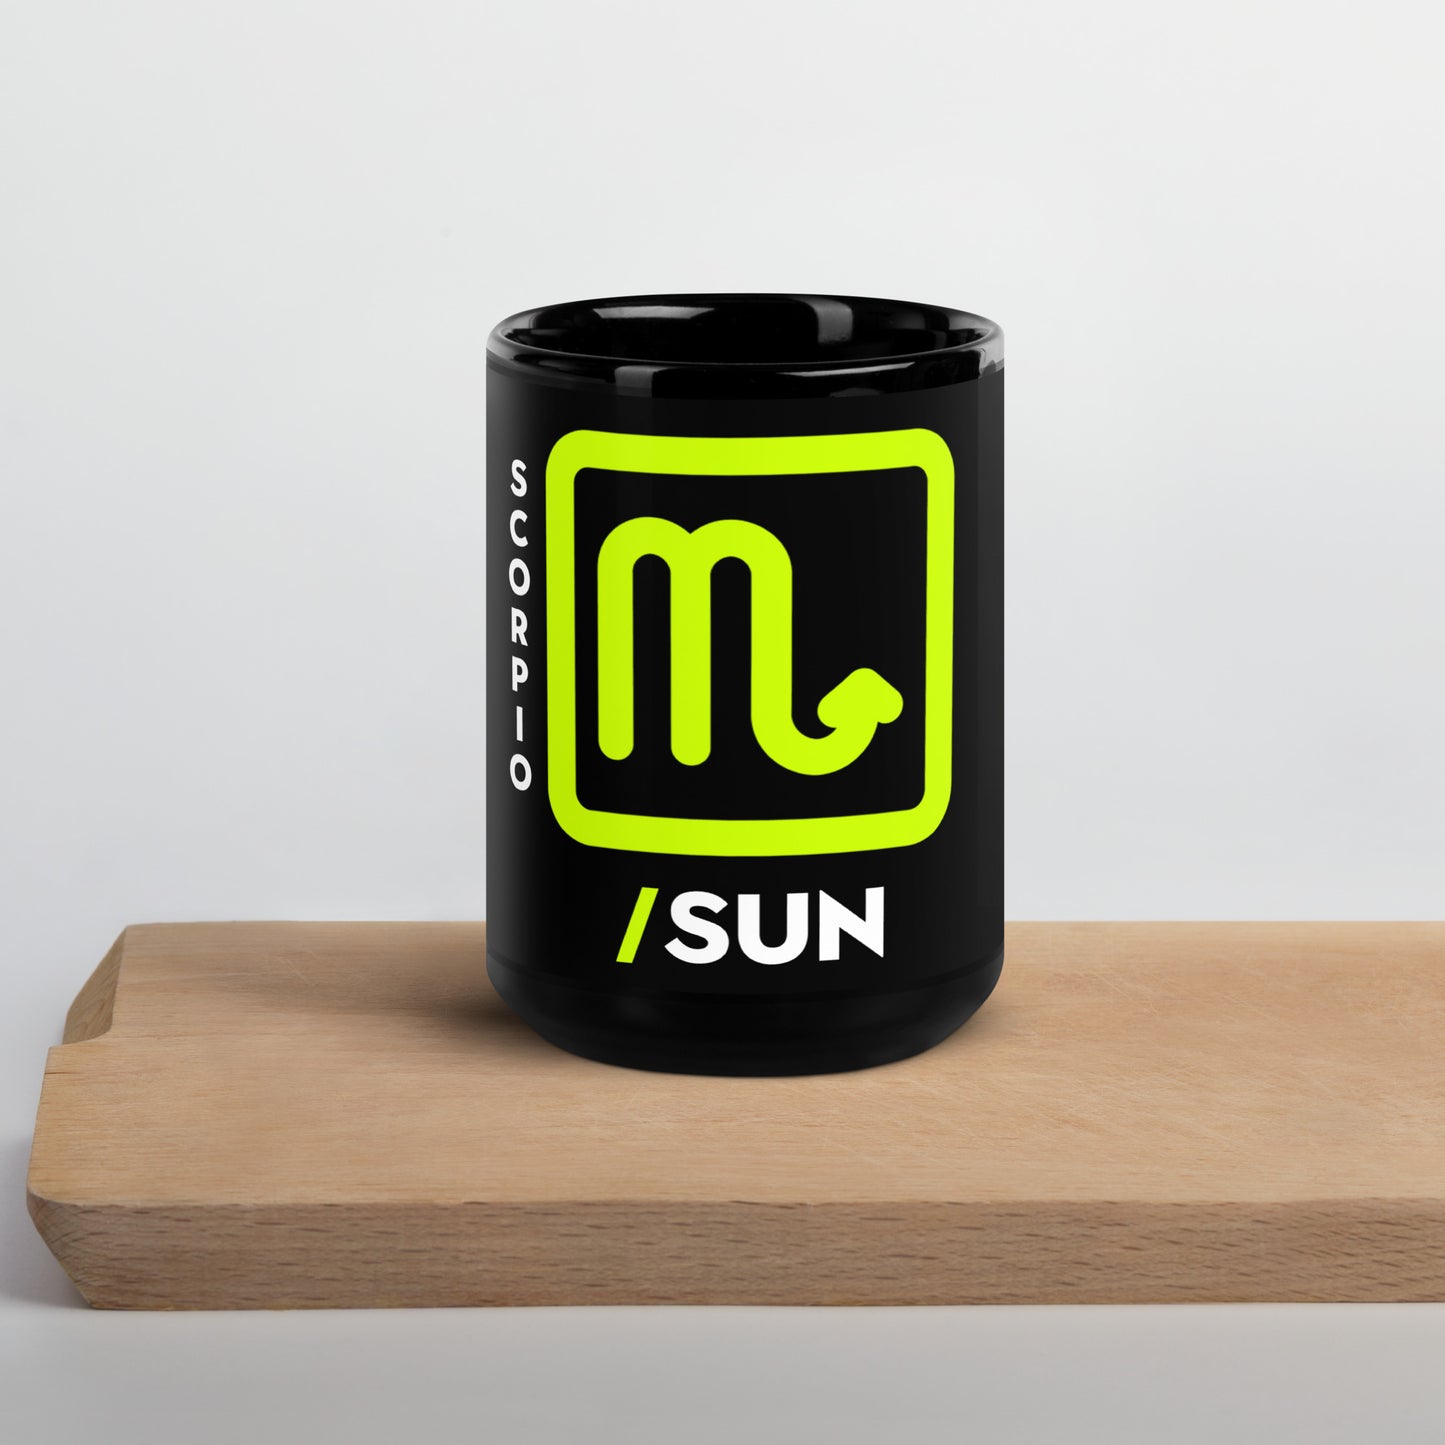 111 LIFE - SCORPIO SUN ZODIAC - Black Glossy Mug